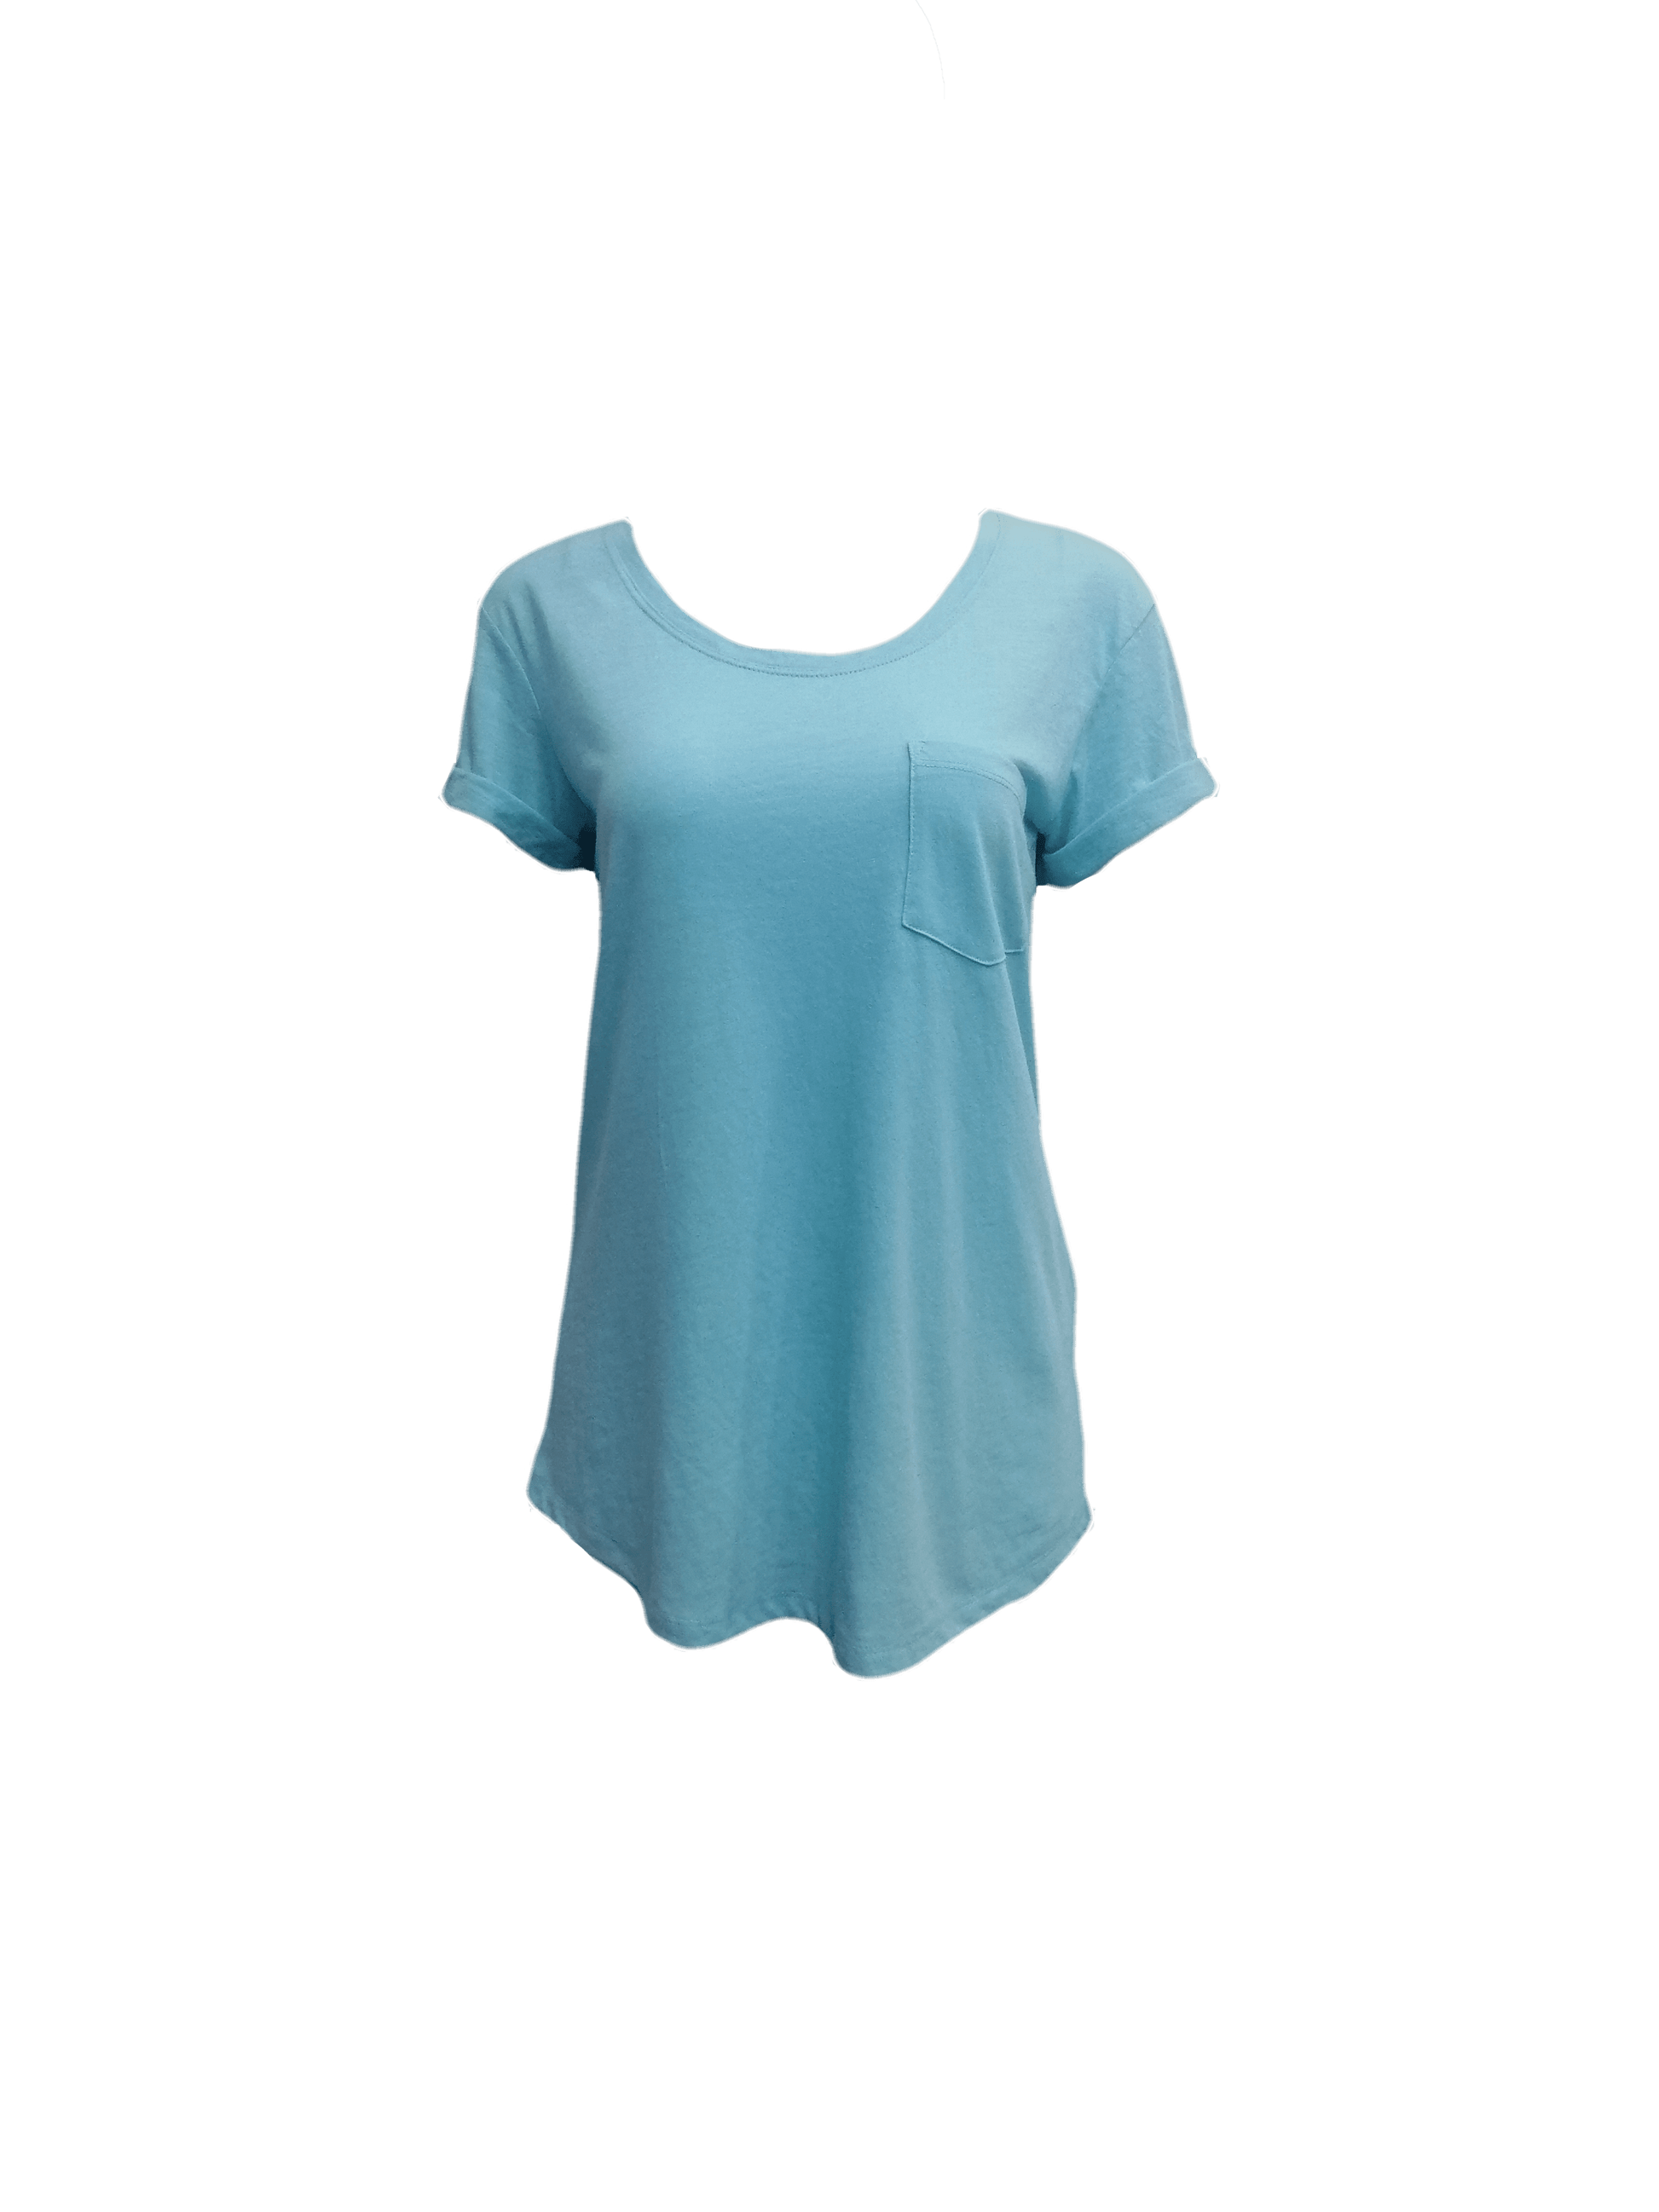 A.N.A Womens Tops X-Small / Blue Short Sleeve T-shirt